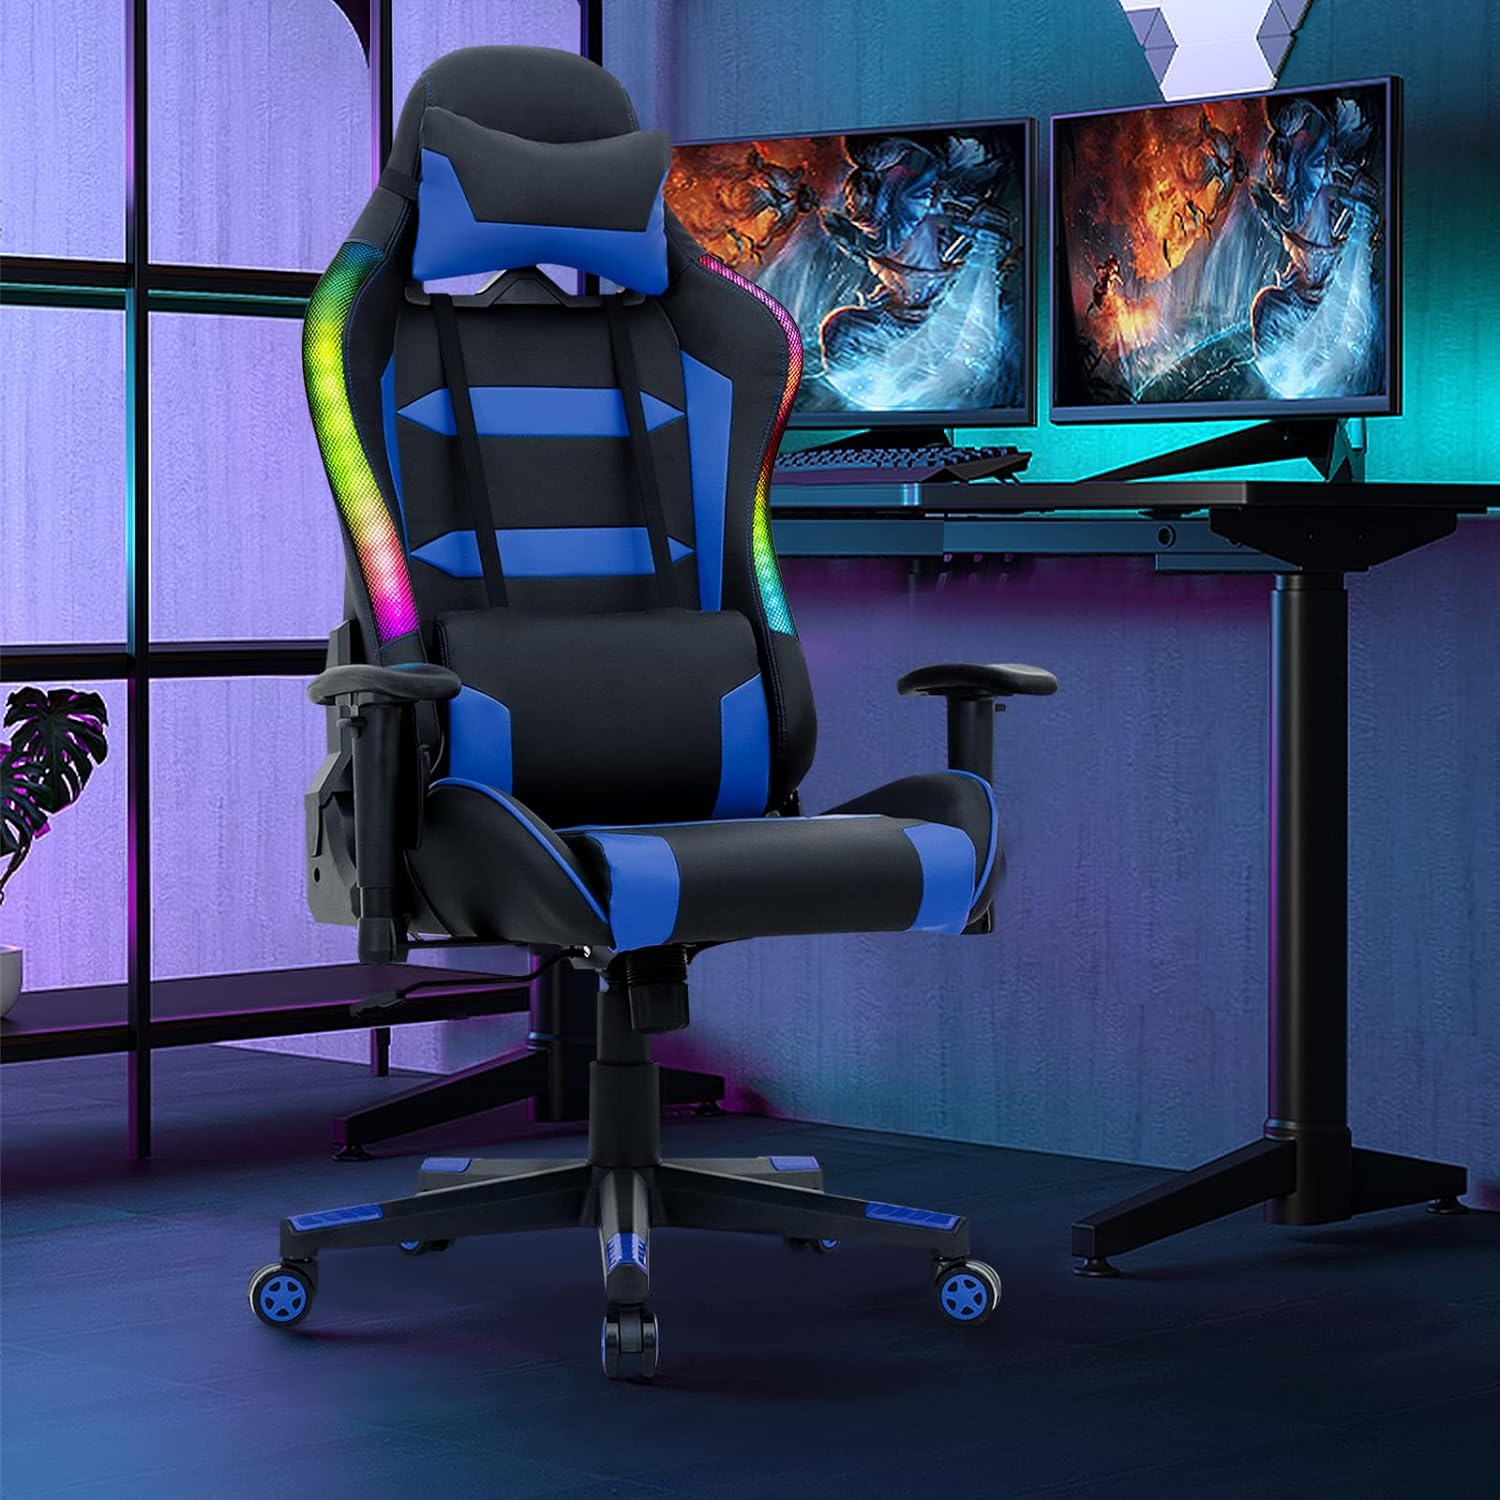 Silla de juegos RGB silla ergonómica de videojuegos con luz LED silla de